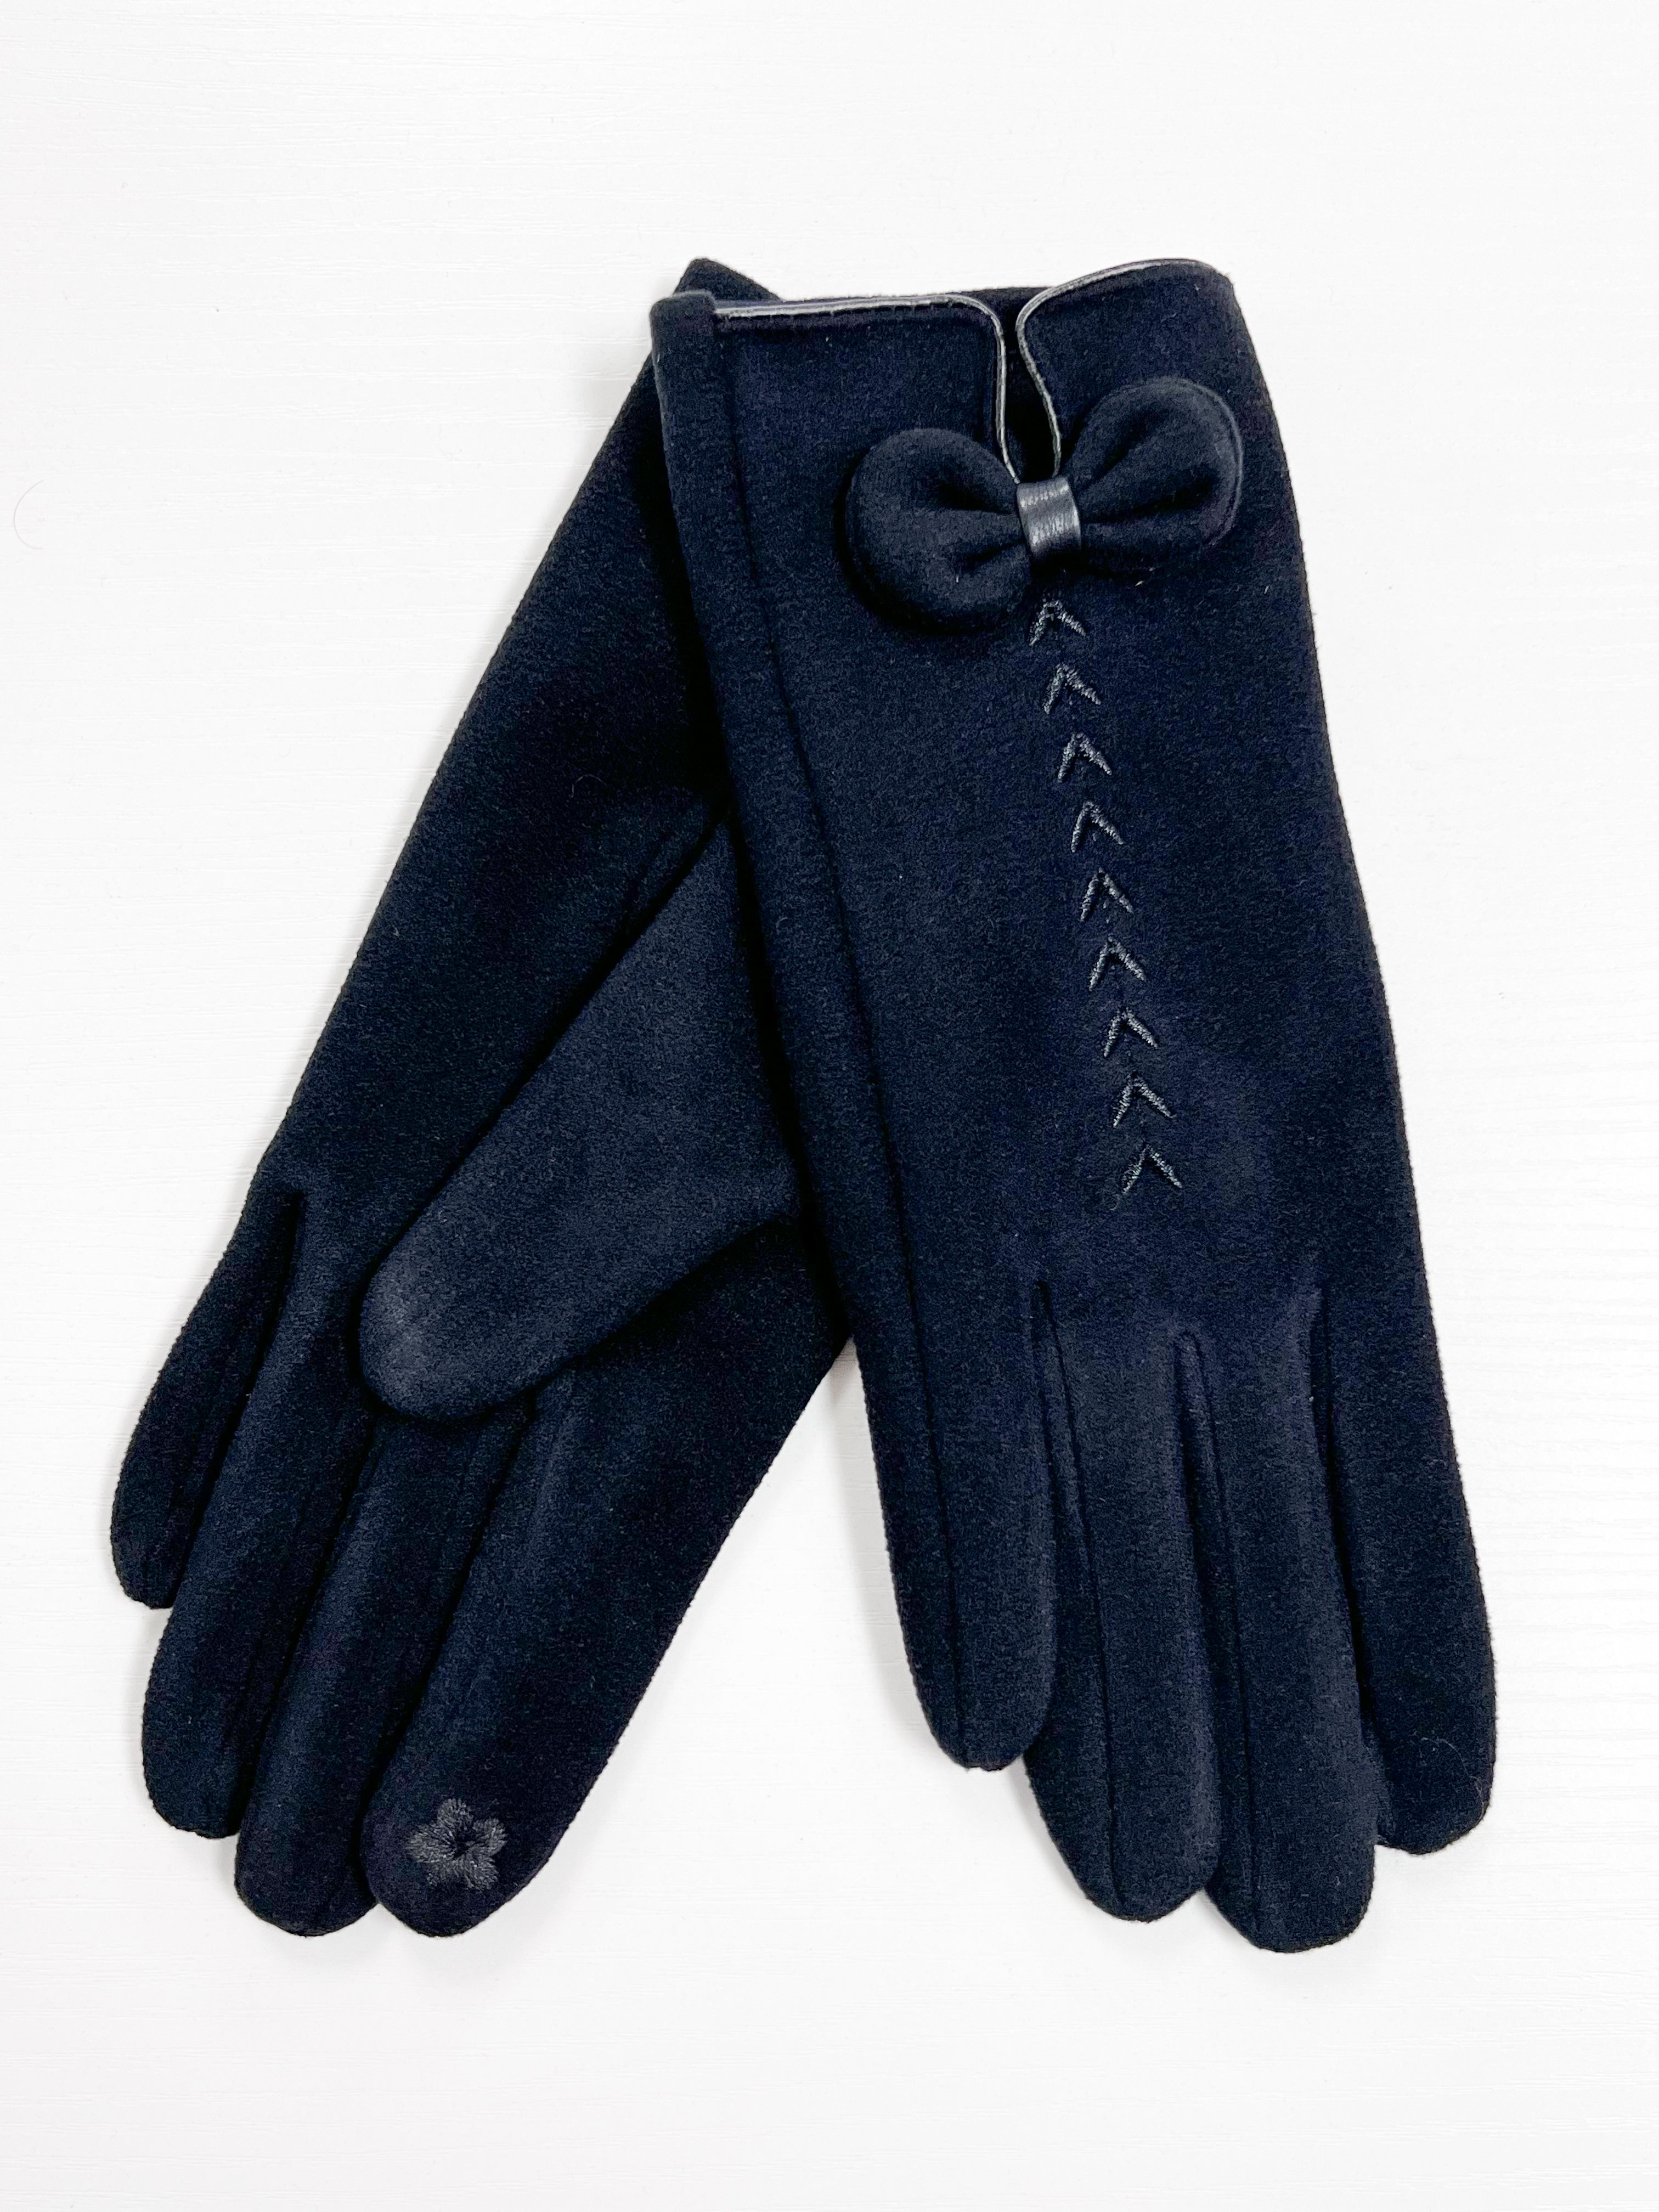 Alli - Smart Touch Gloves (Black)